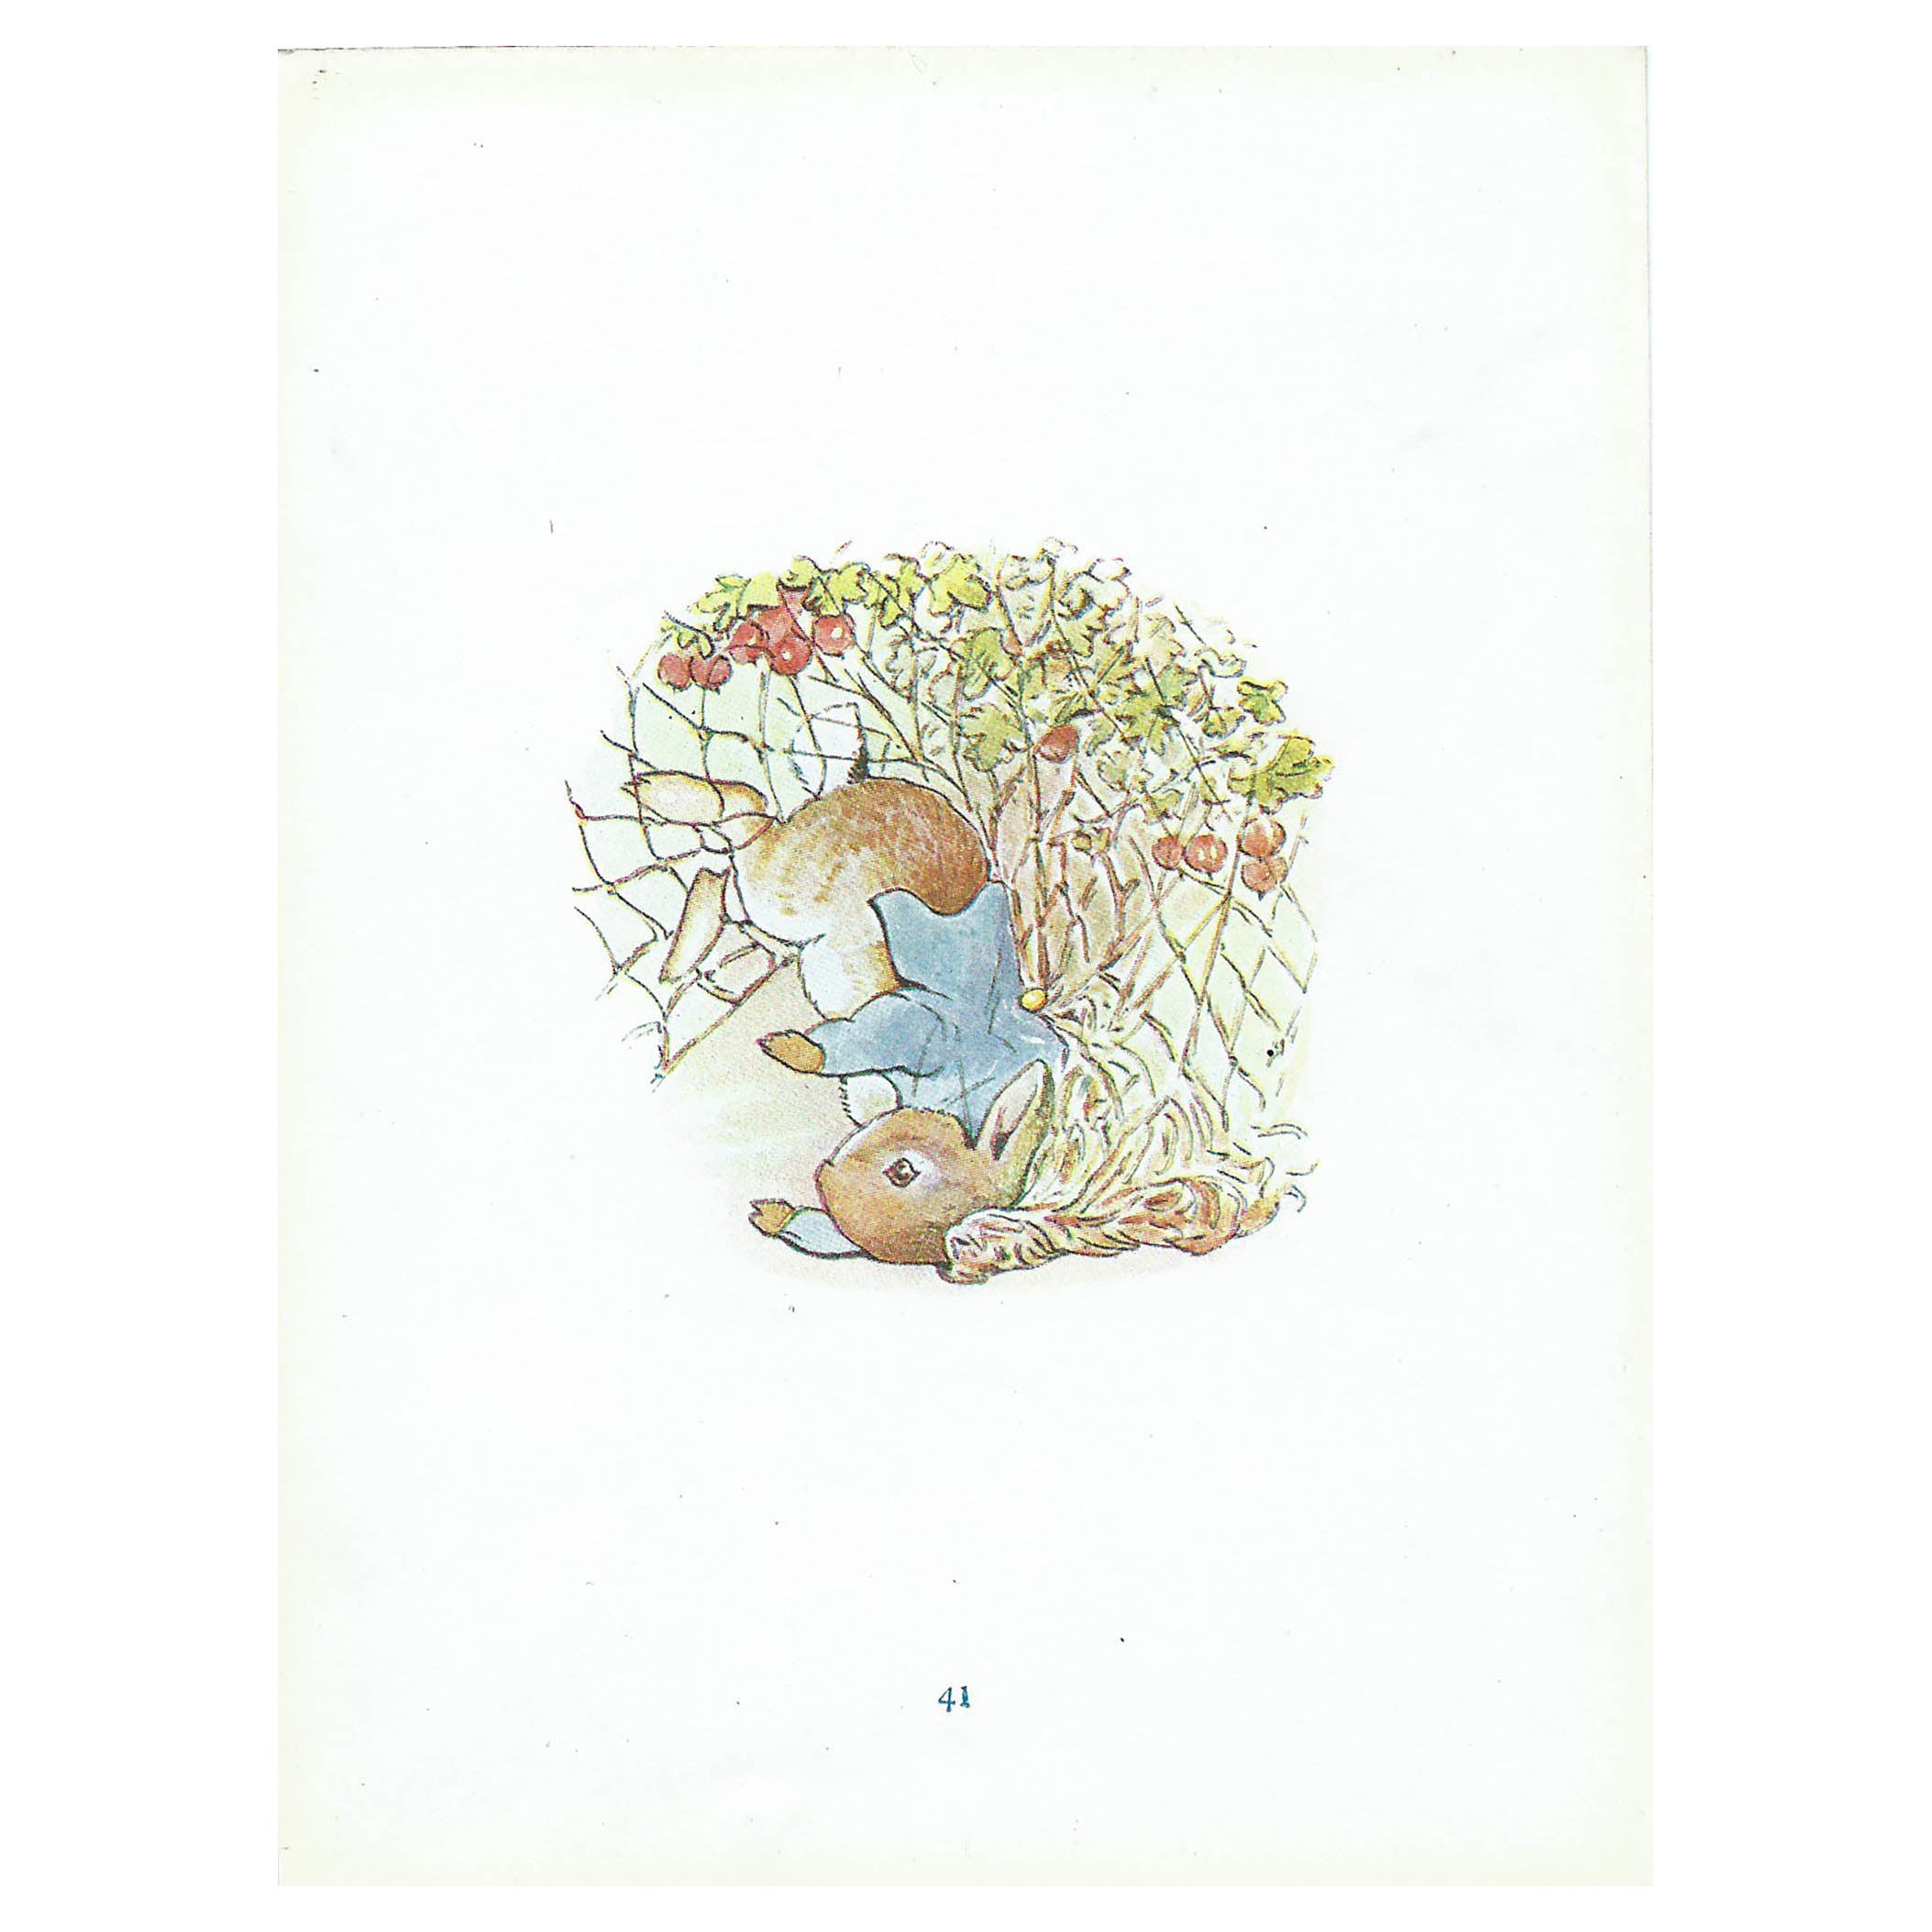 Original Vintage Peter Rabbit Print After Beatrix Potter. C.1920